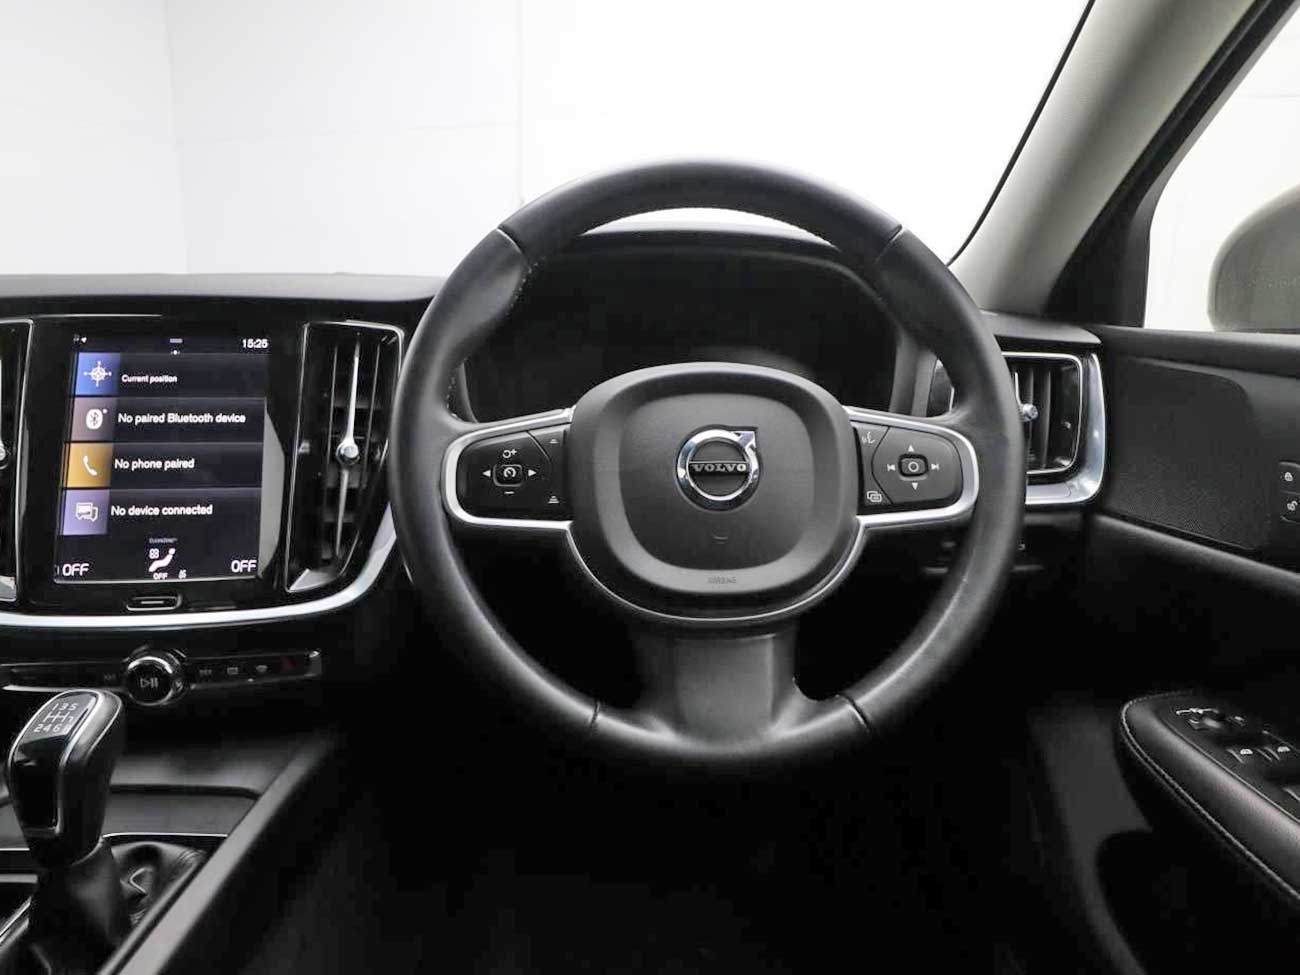 Volvo V60 interior view